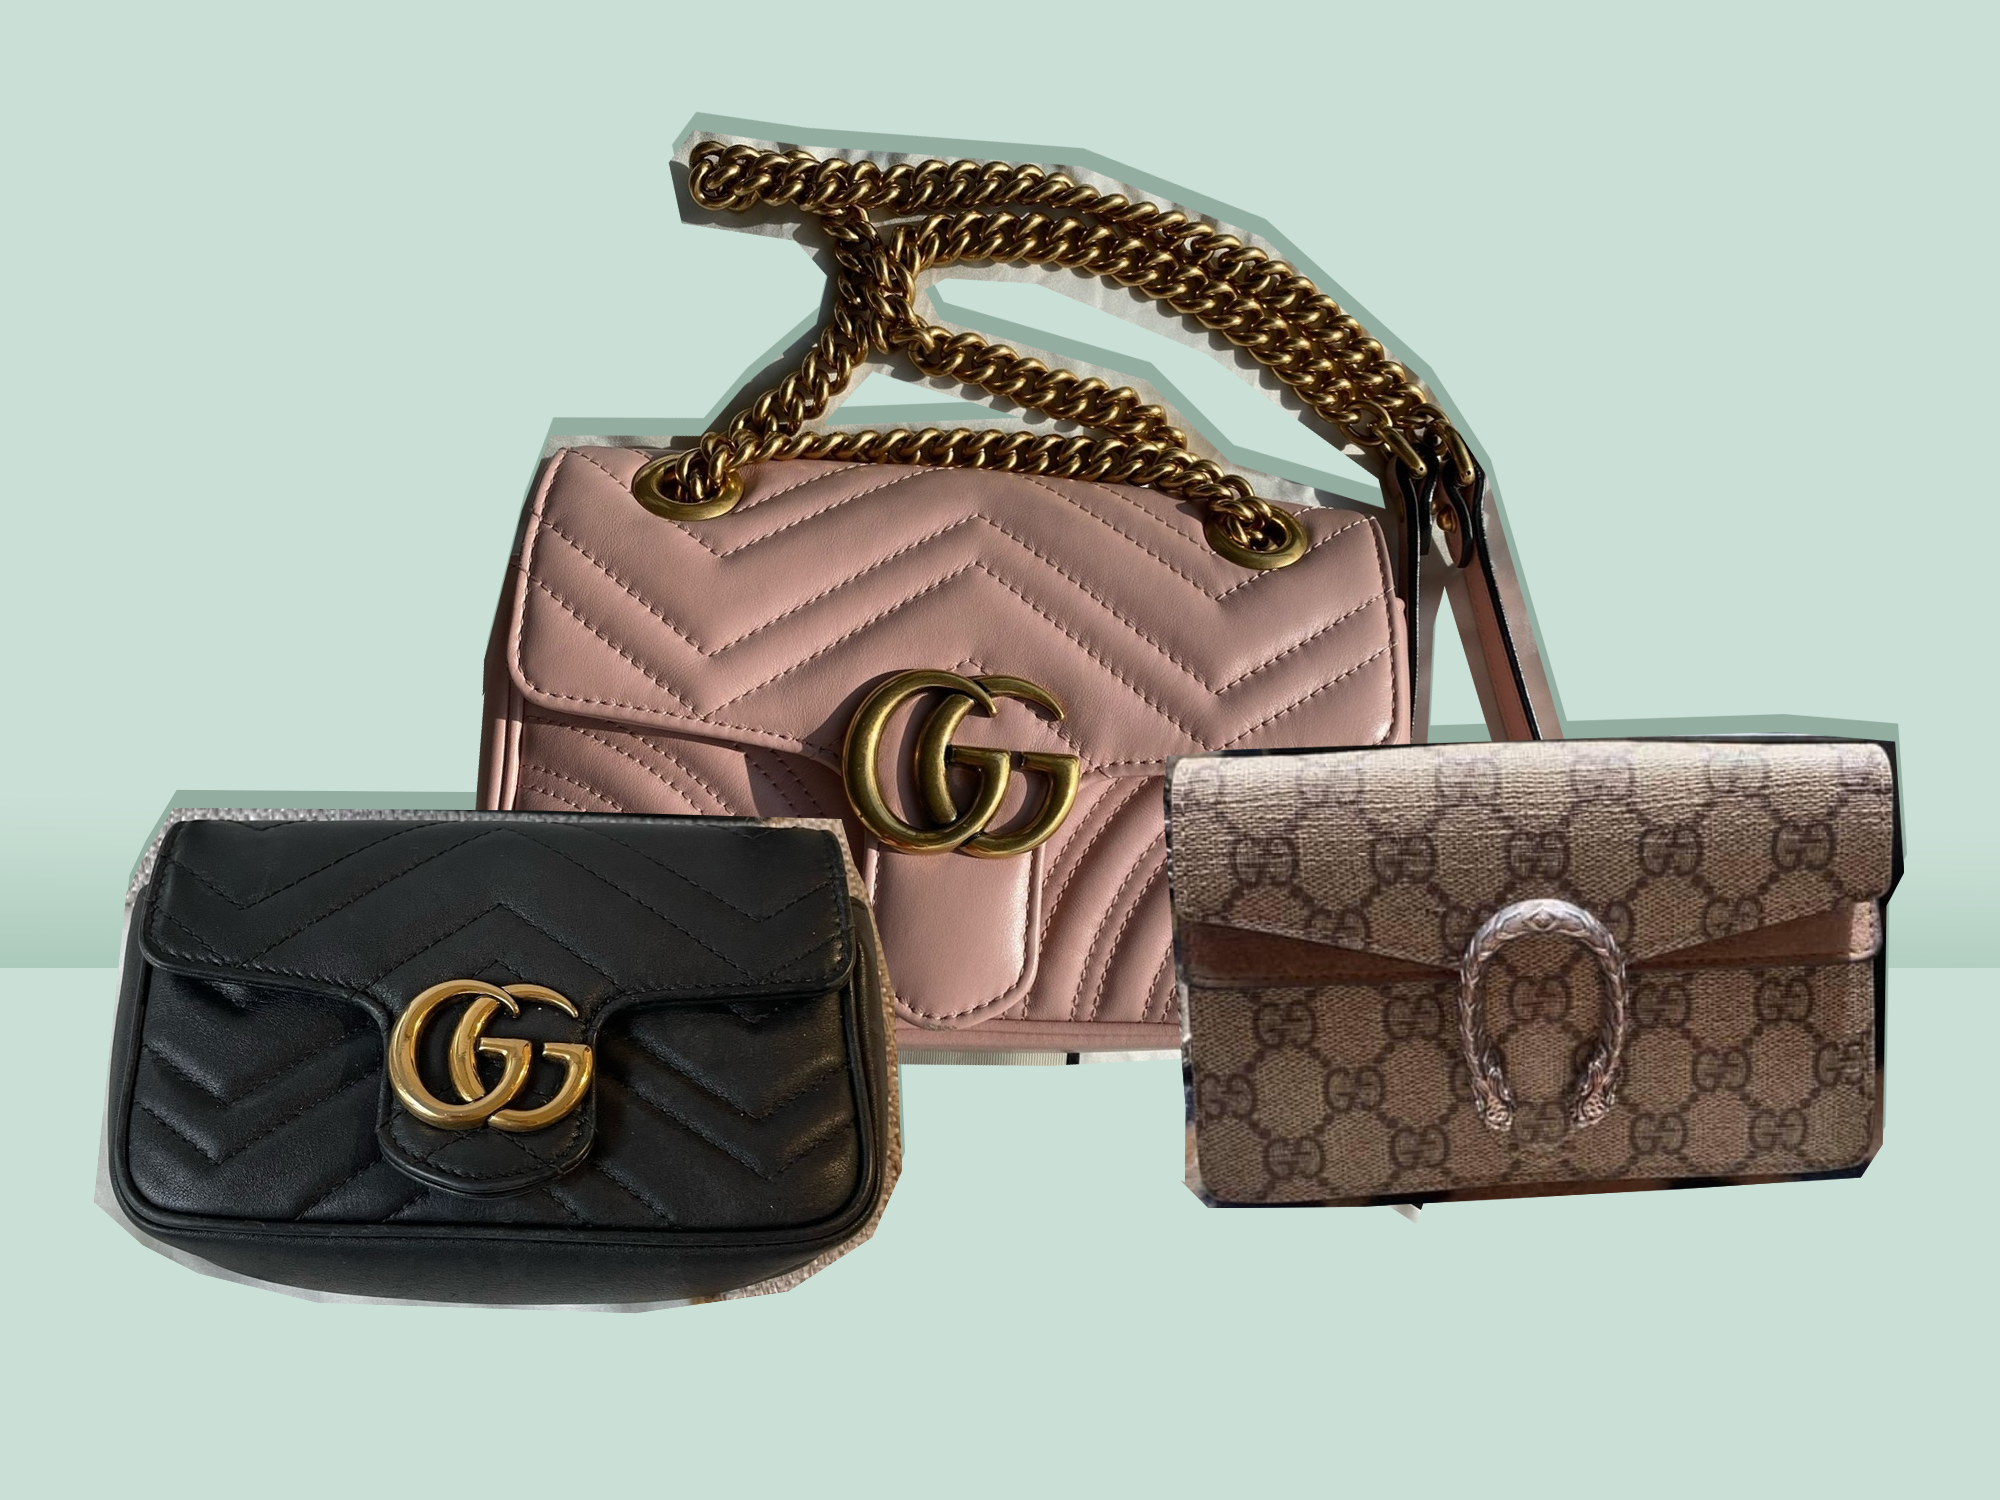 Remember these iconic luxury handbags? - Zadaa